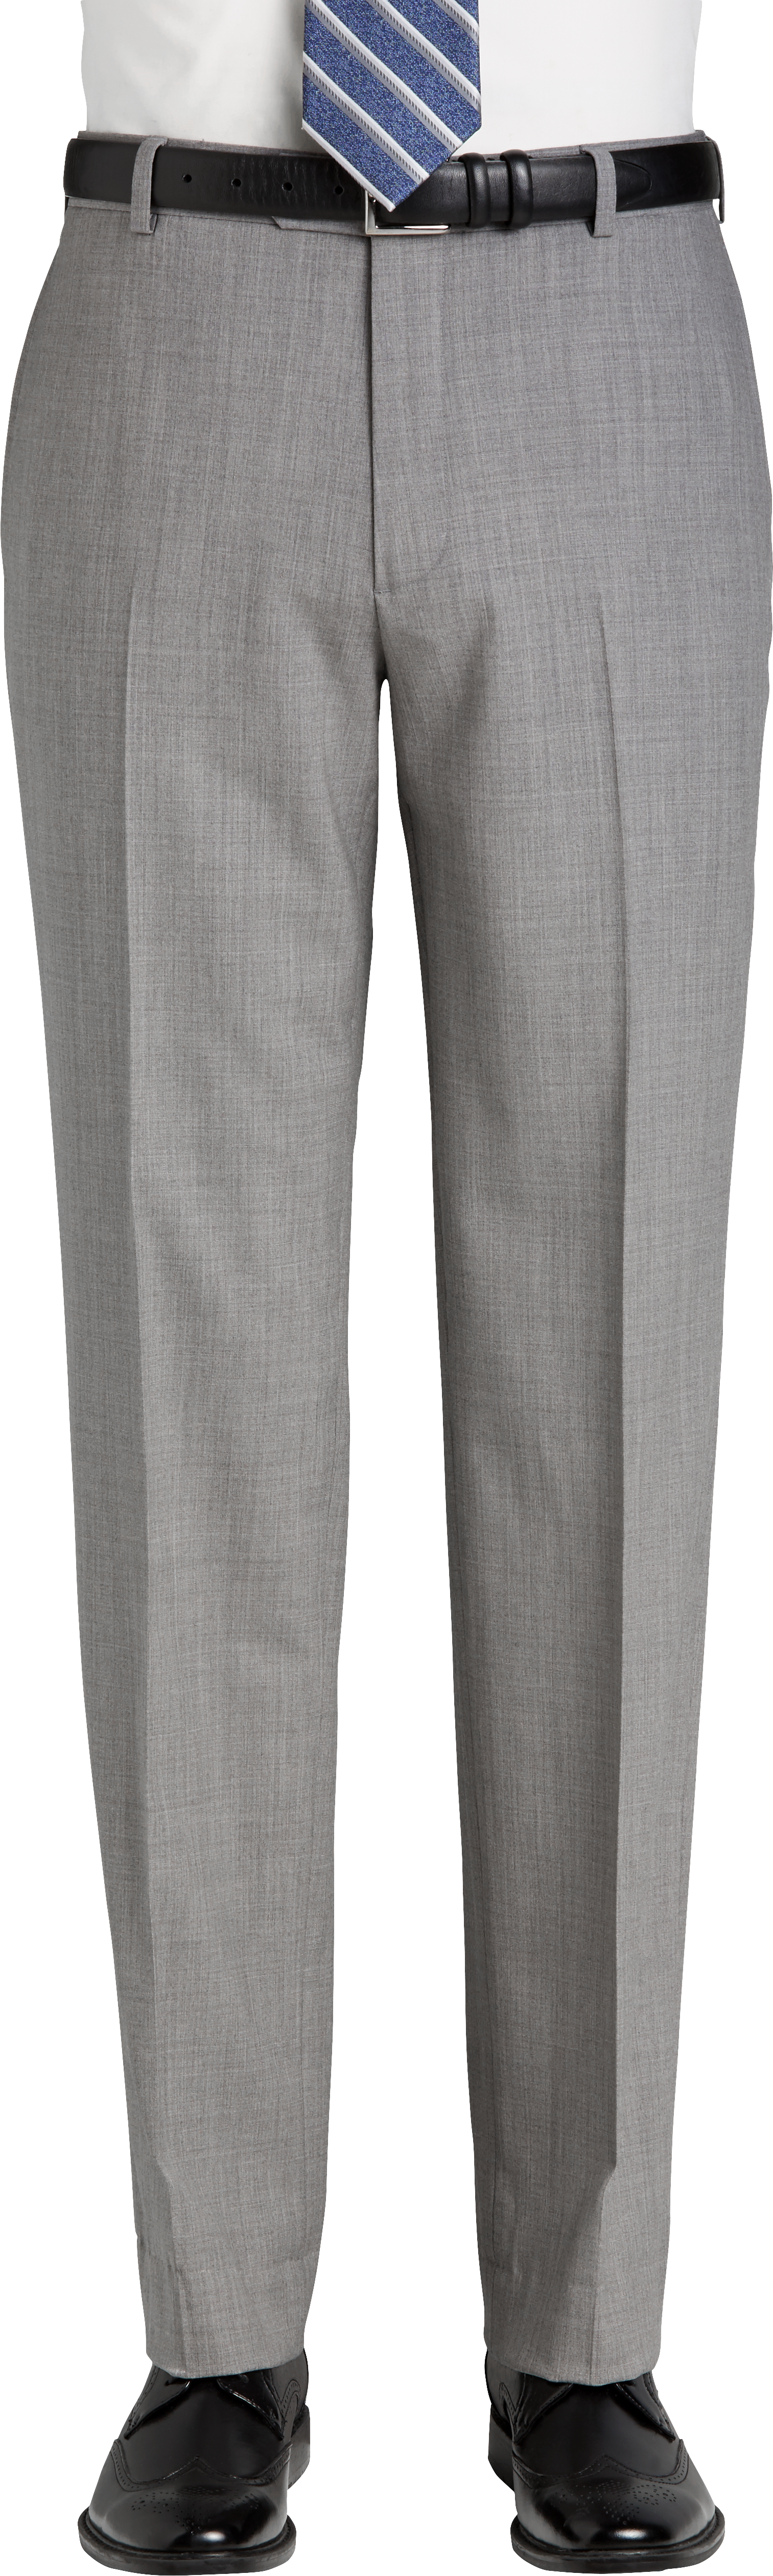 light grey skinny dress pants